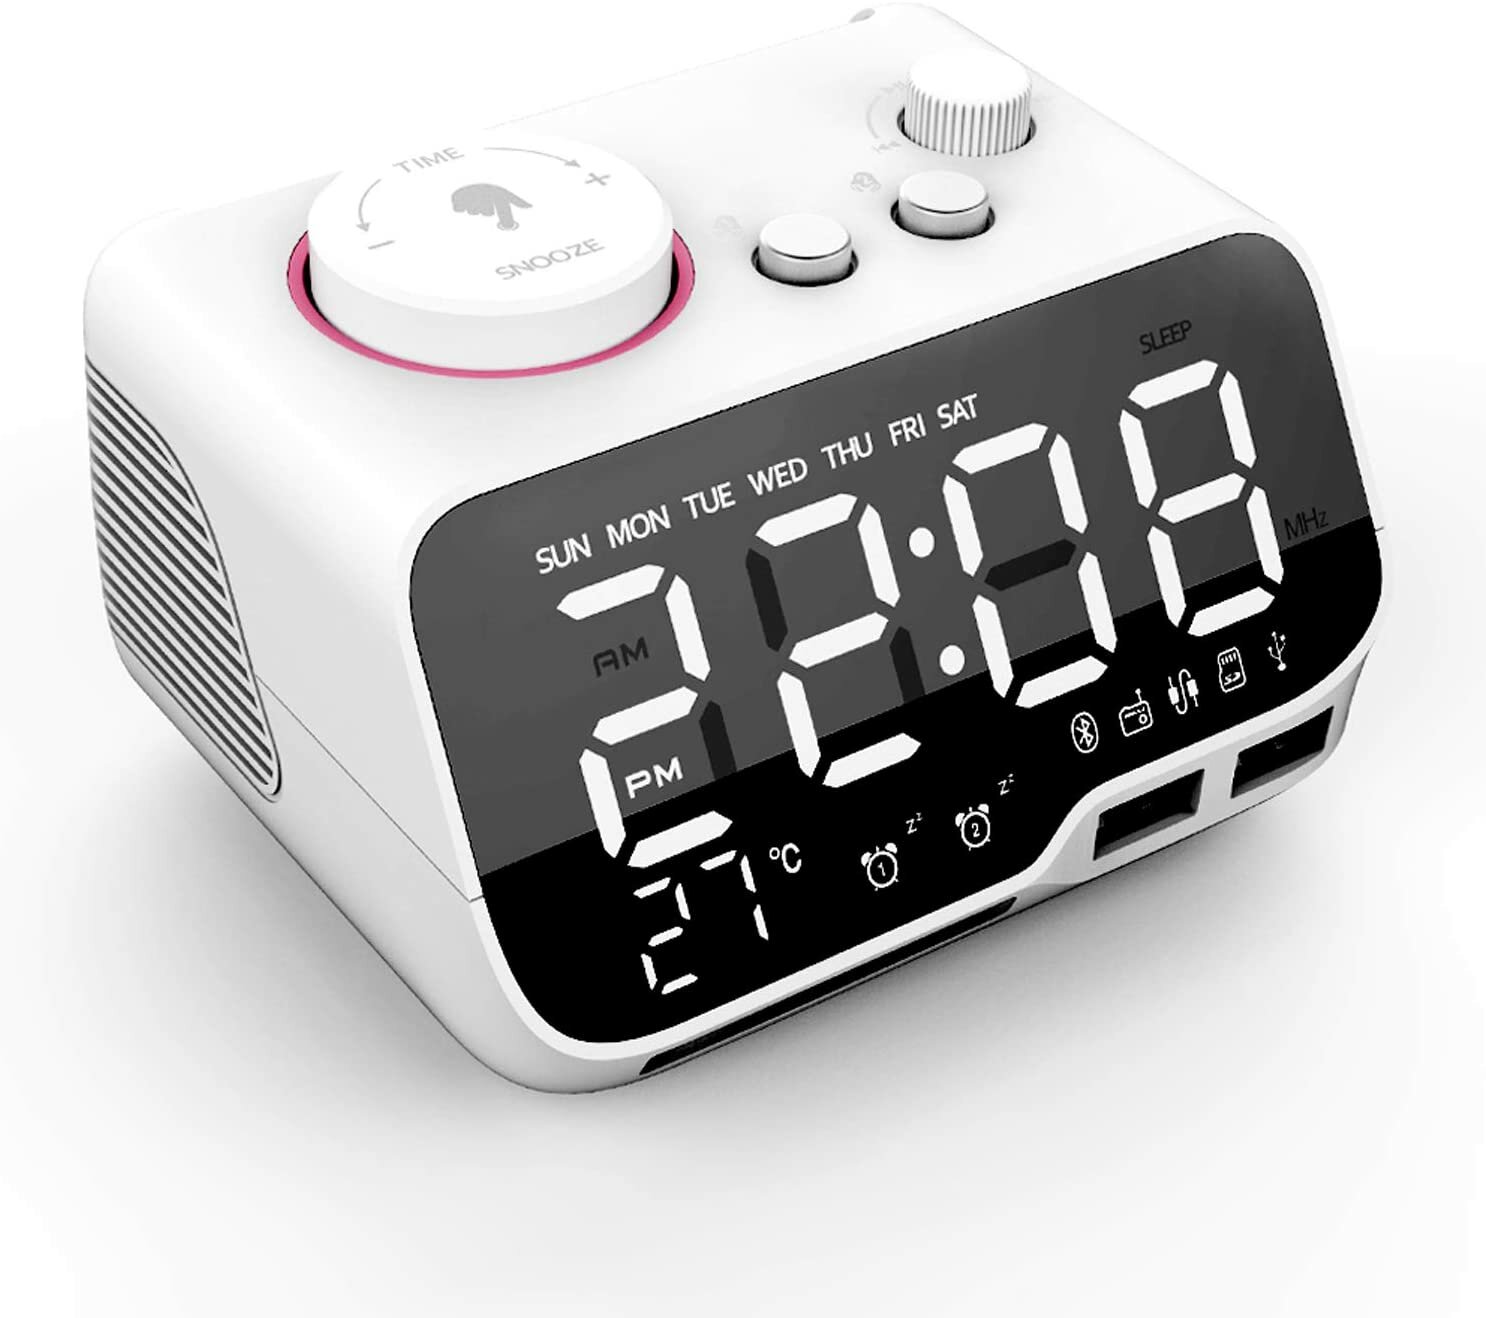 

Uplift Alarm Clock Radio Bluetooth Speaker Battery Backup Clock with Dimmer FM Radio Snooze 2 USB Charging Ports Thermom